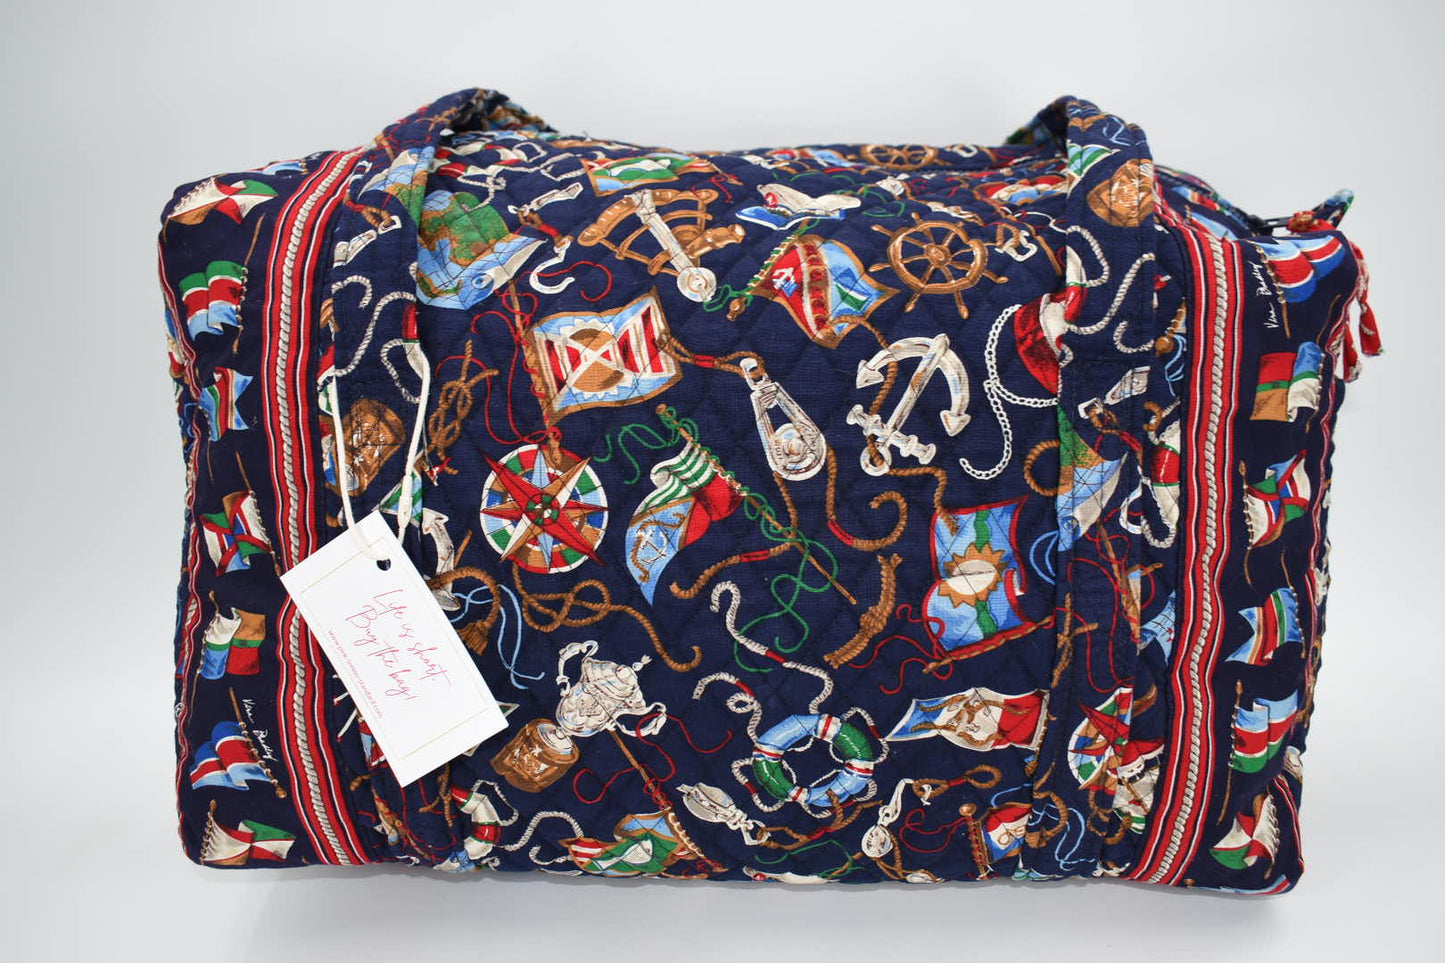 Vintage Vera Bradley Medium Duffel Bag in Regatta-1994 Pattern